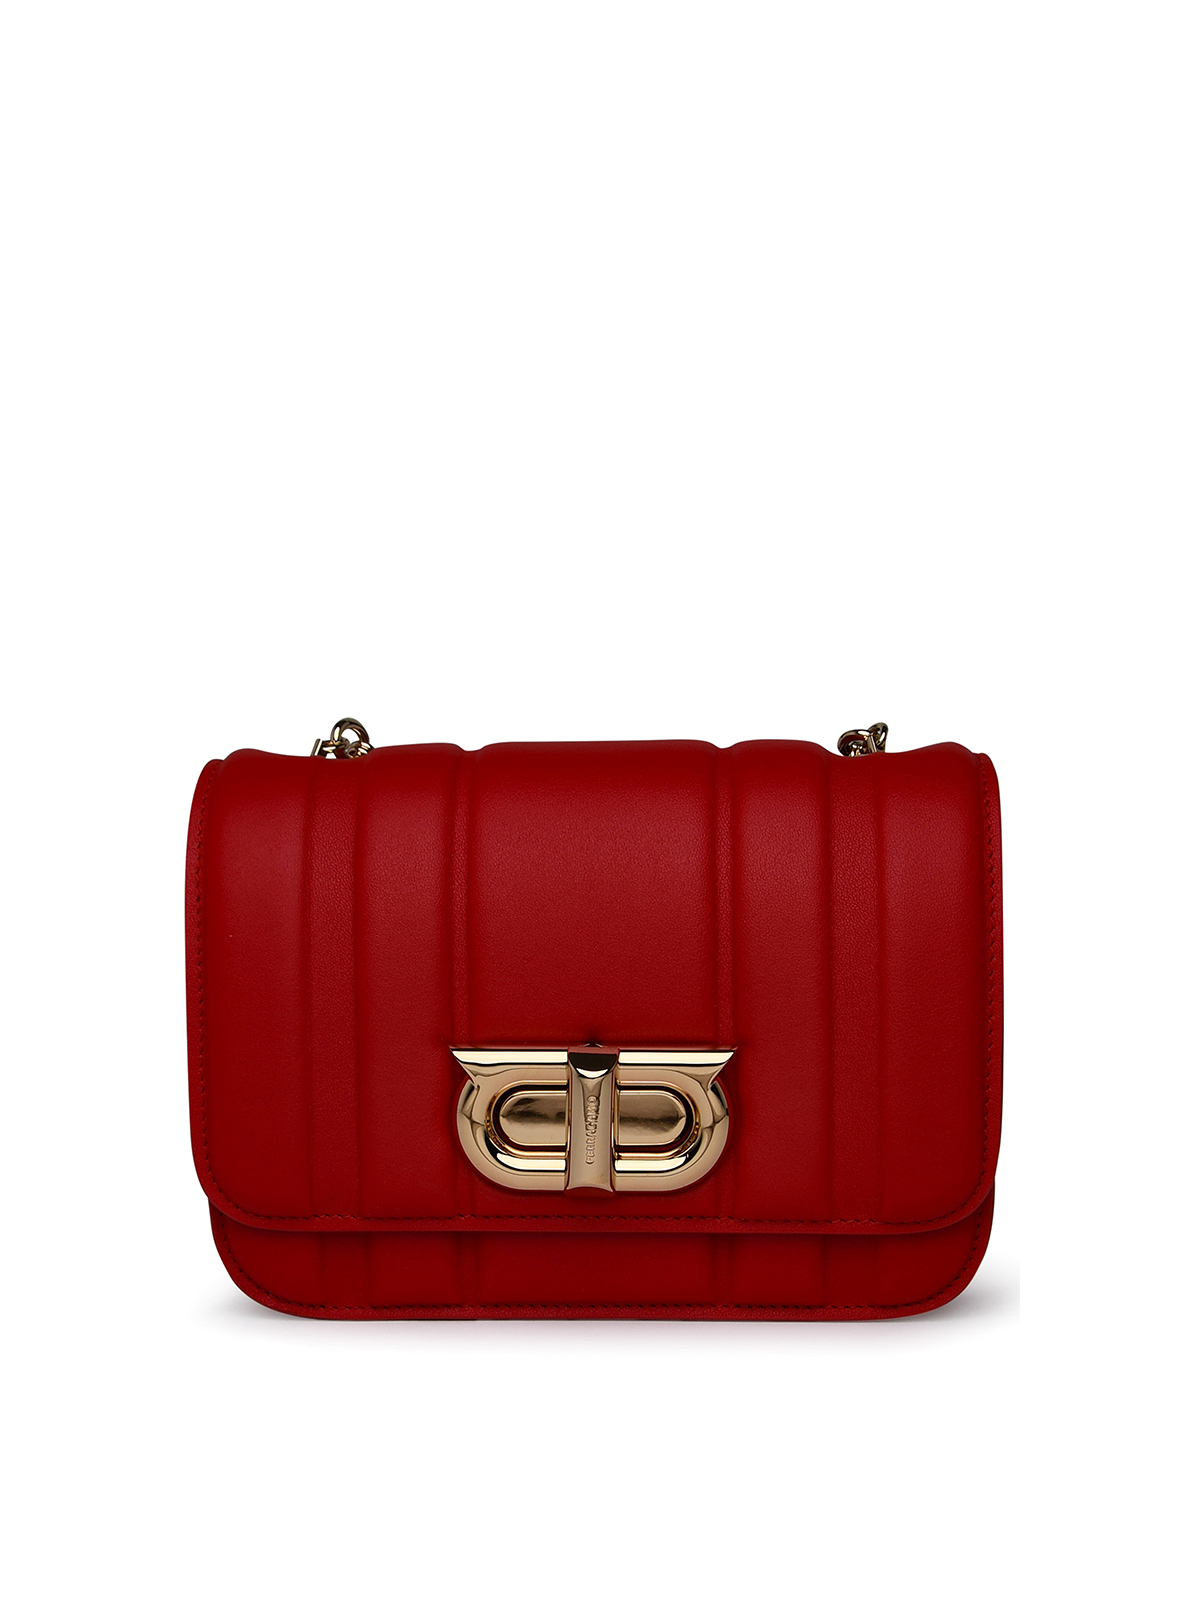 Ferragamo Red Leather Bag